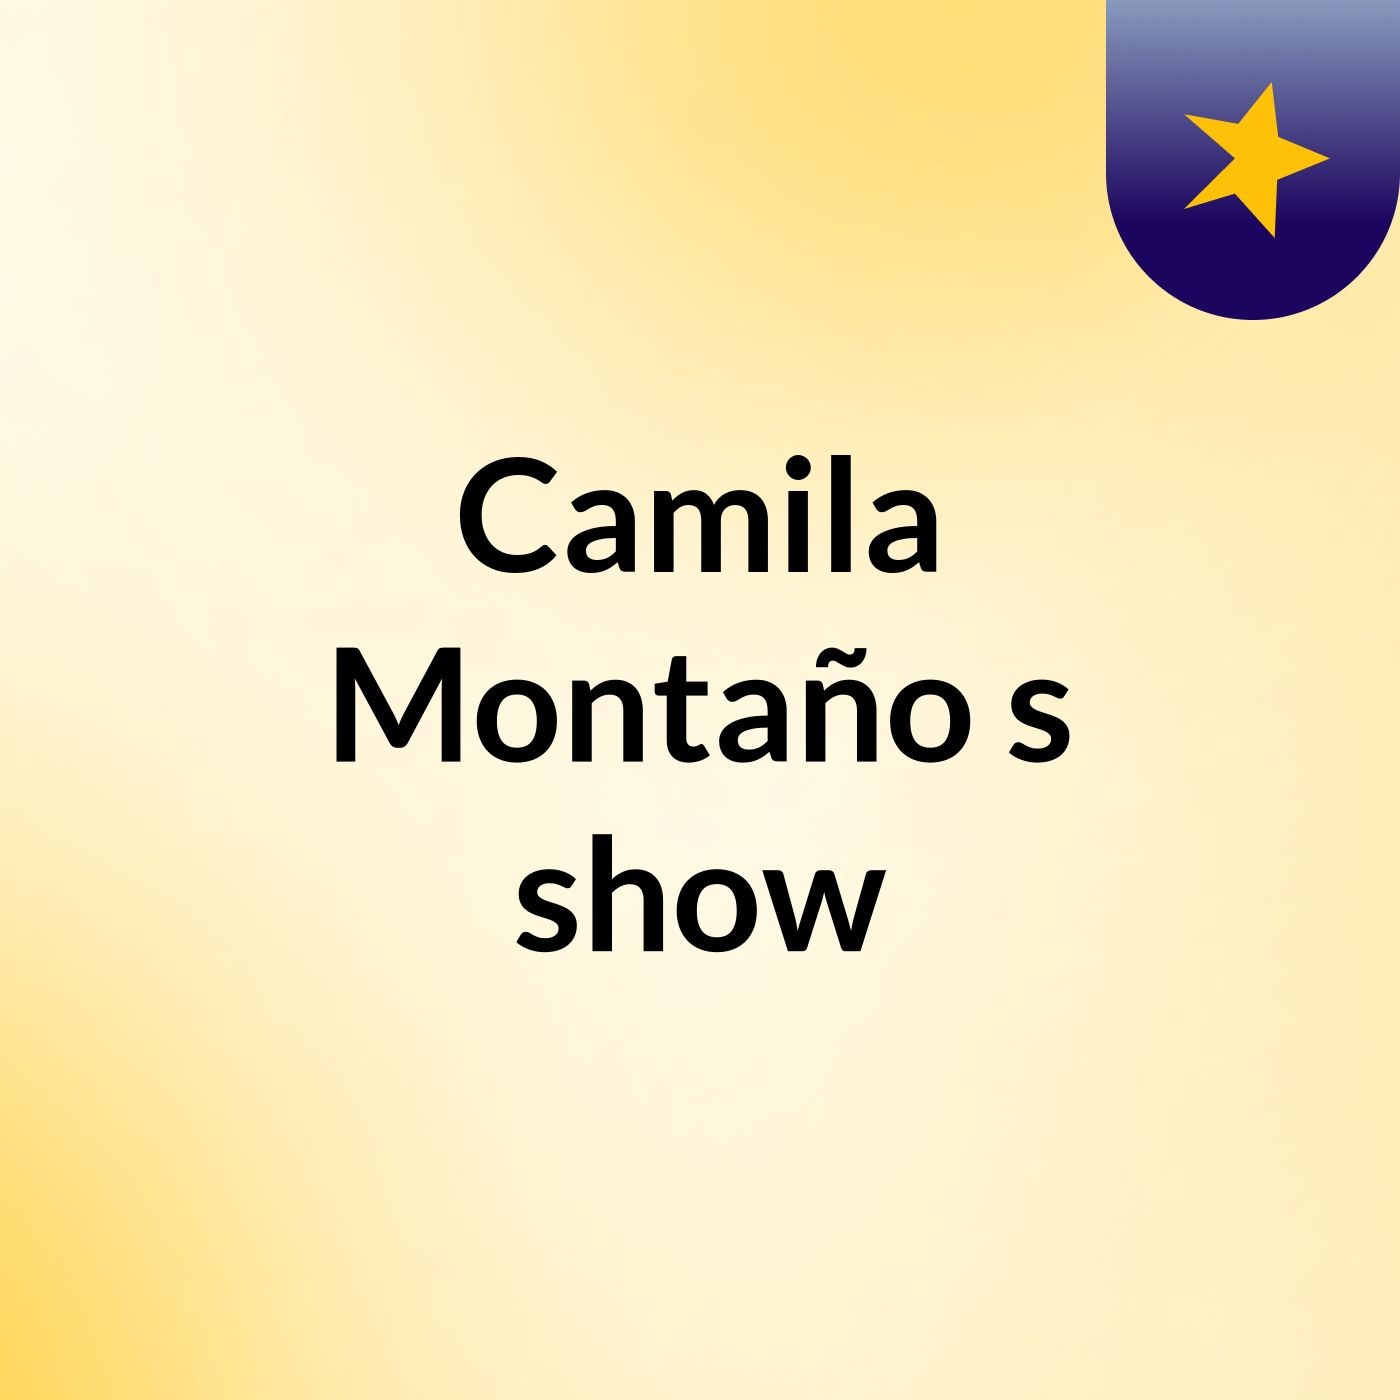 Camila Montaño's show